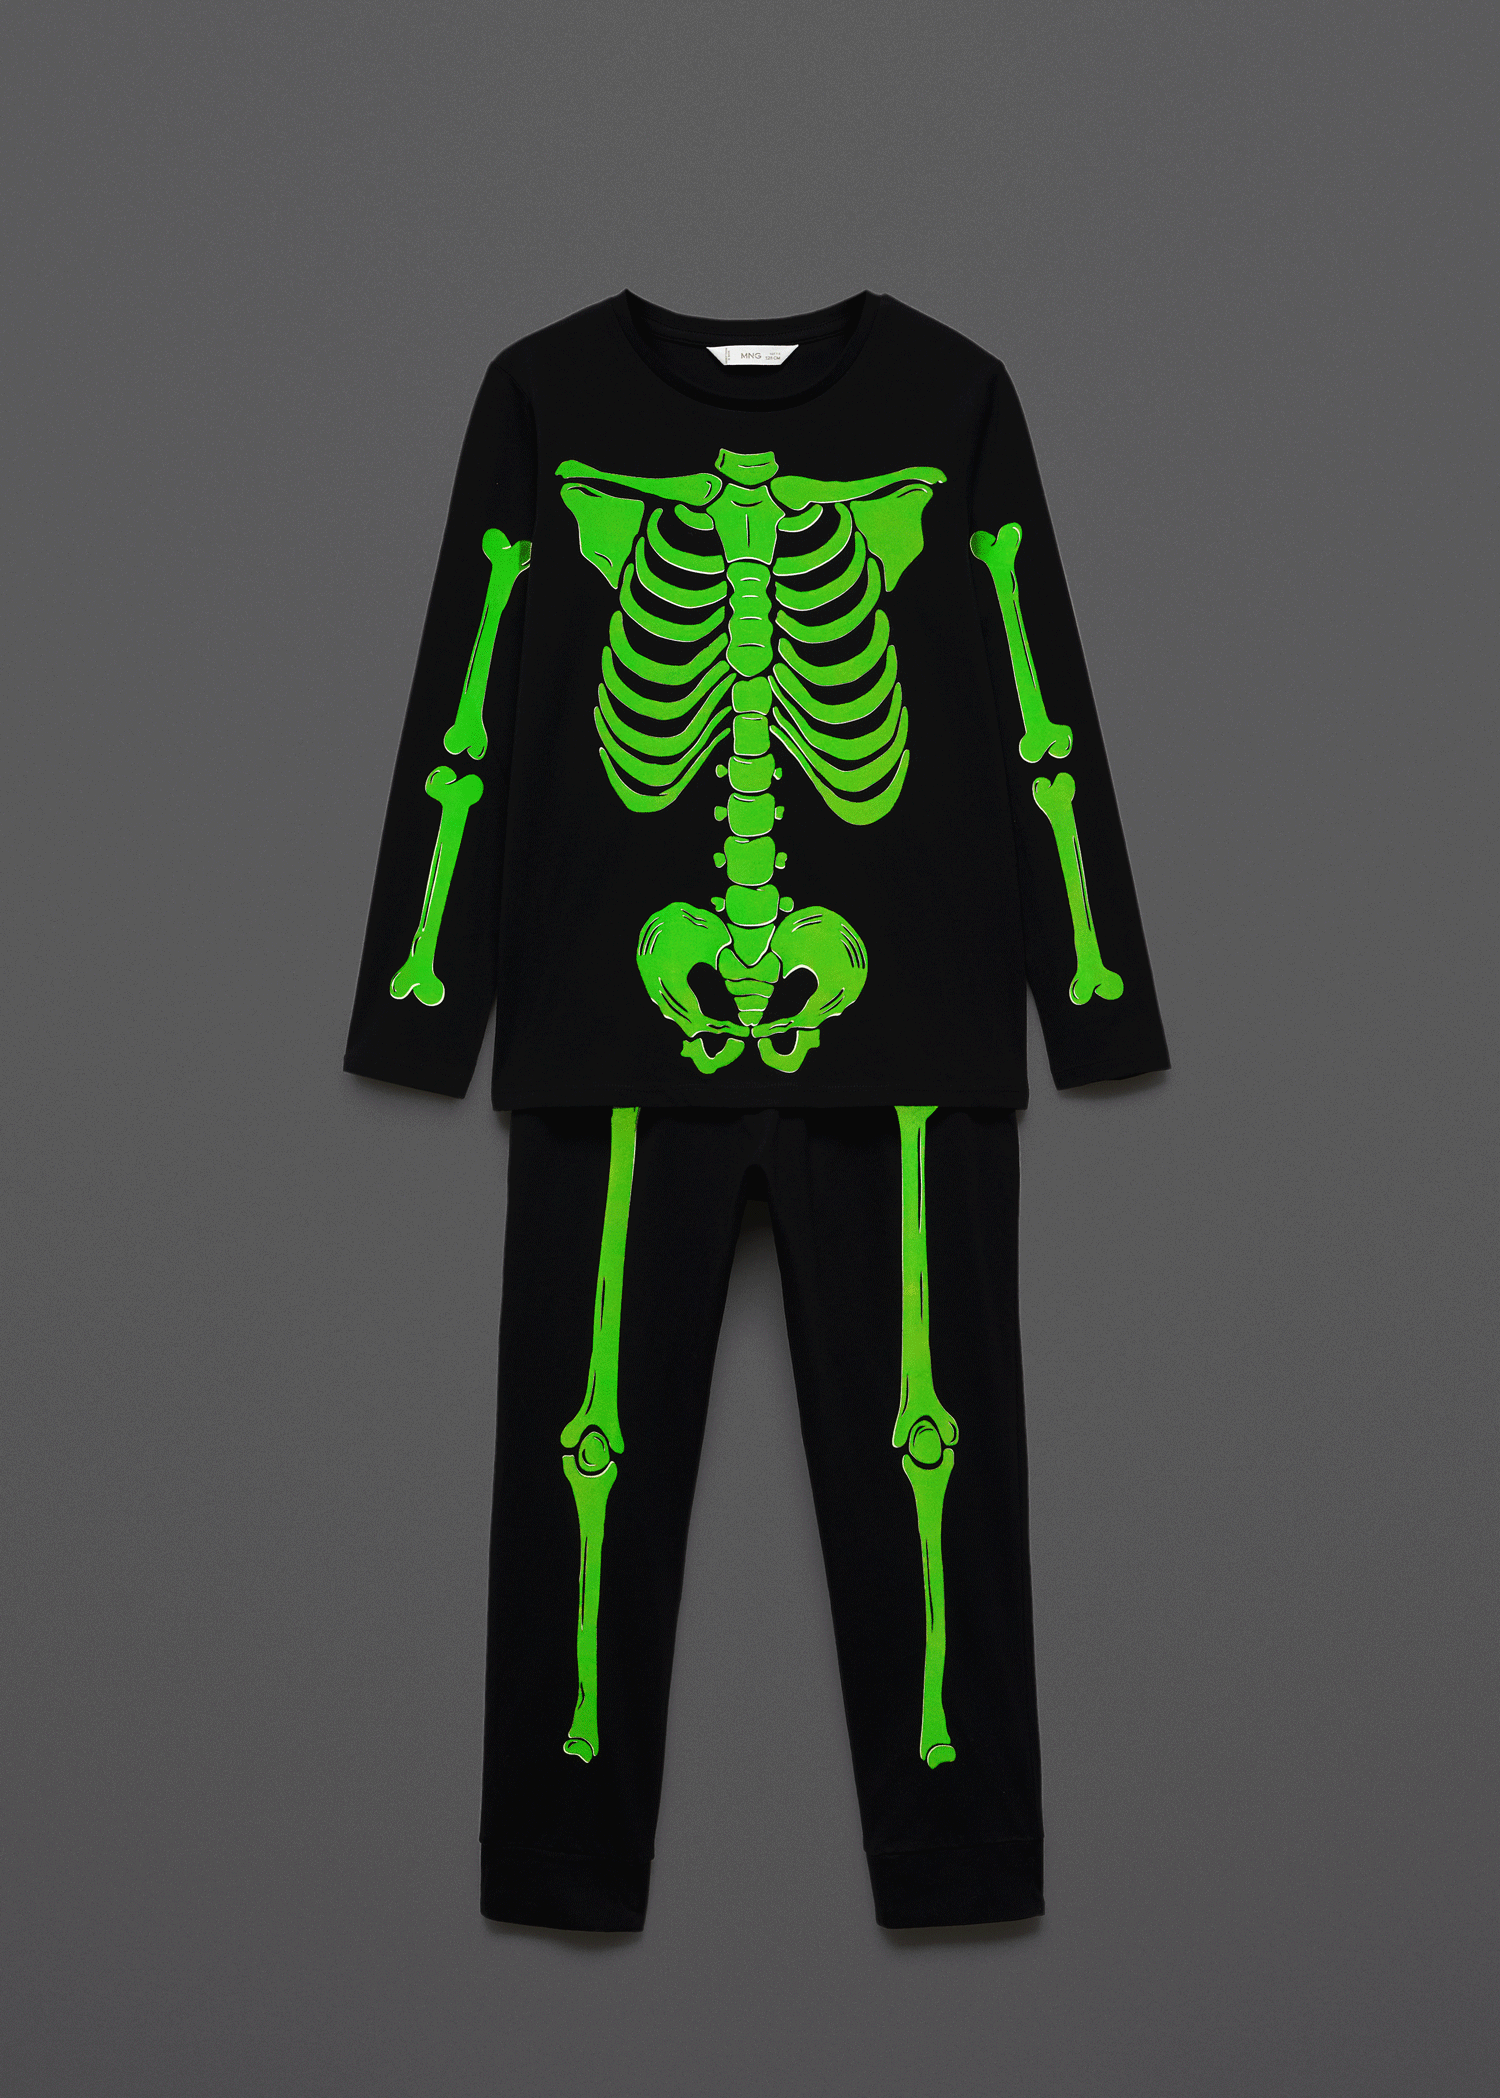 Glow in the dark skeleton pyjama - Details of the article 9